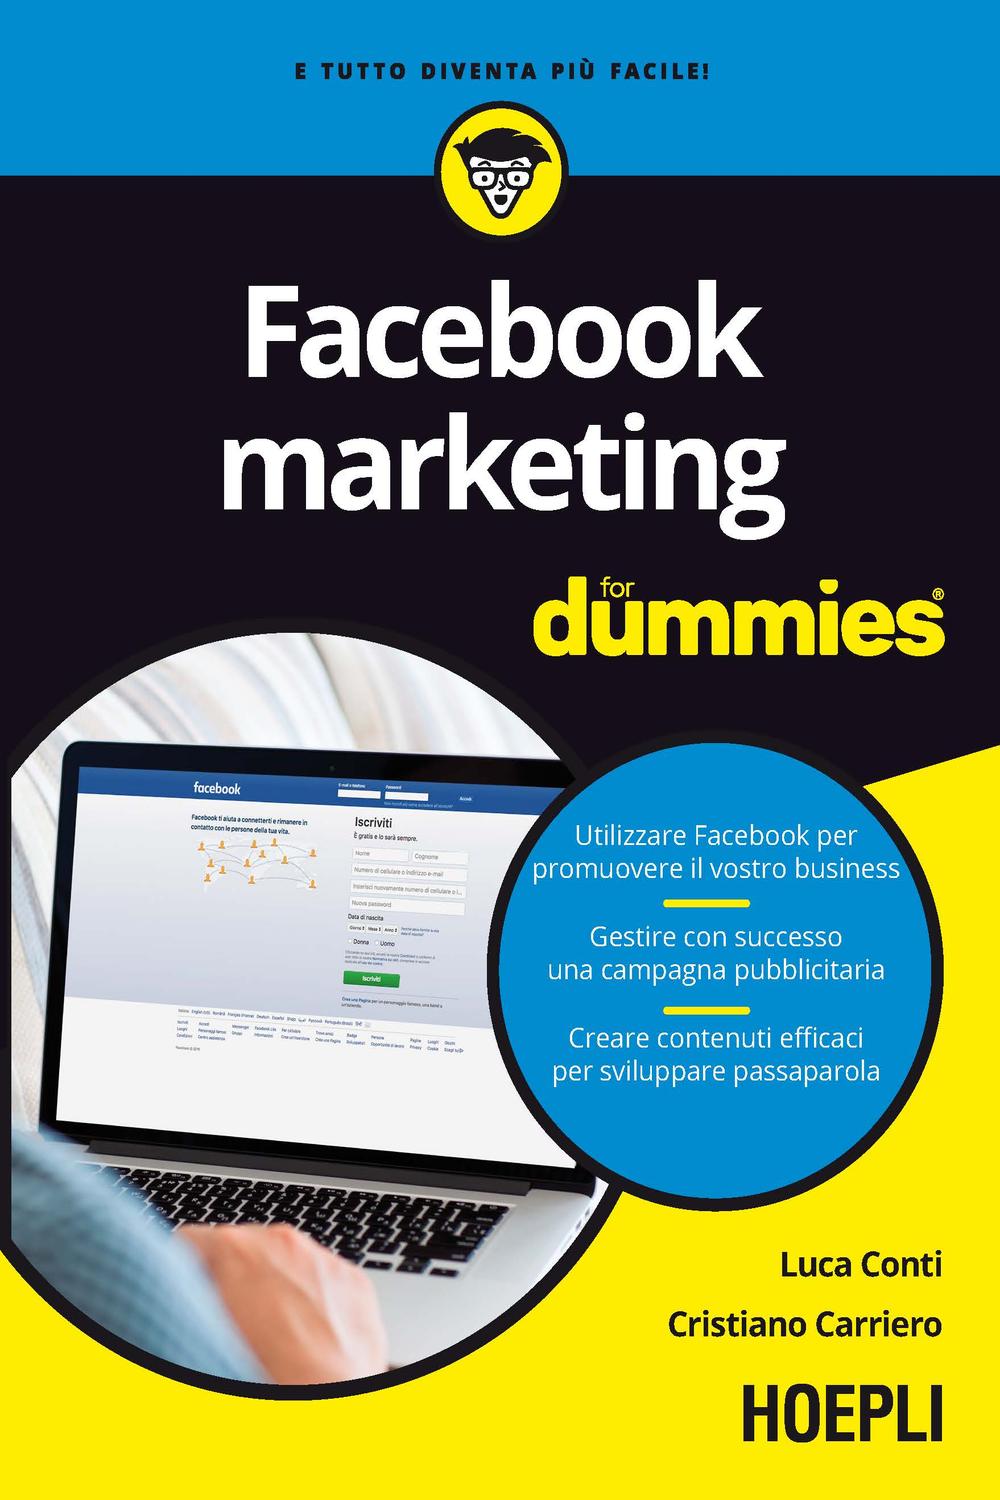 Facebook marketing for dummies - Luca Conti, Cristiano Carriero